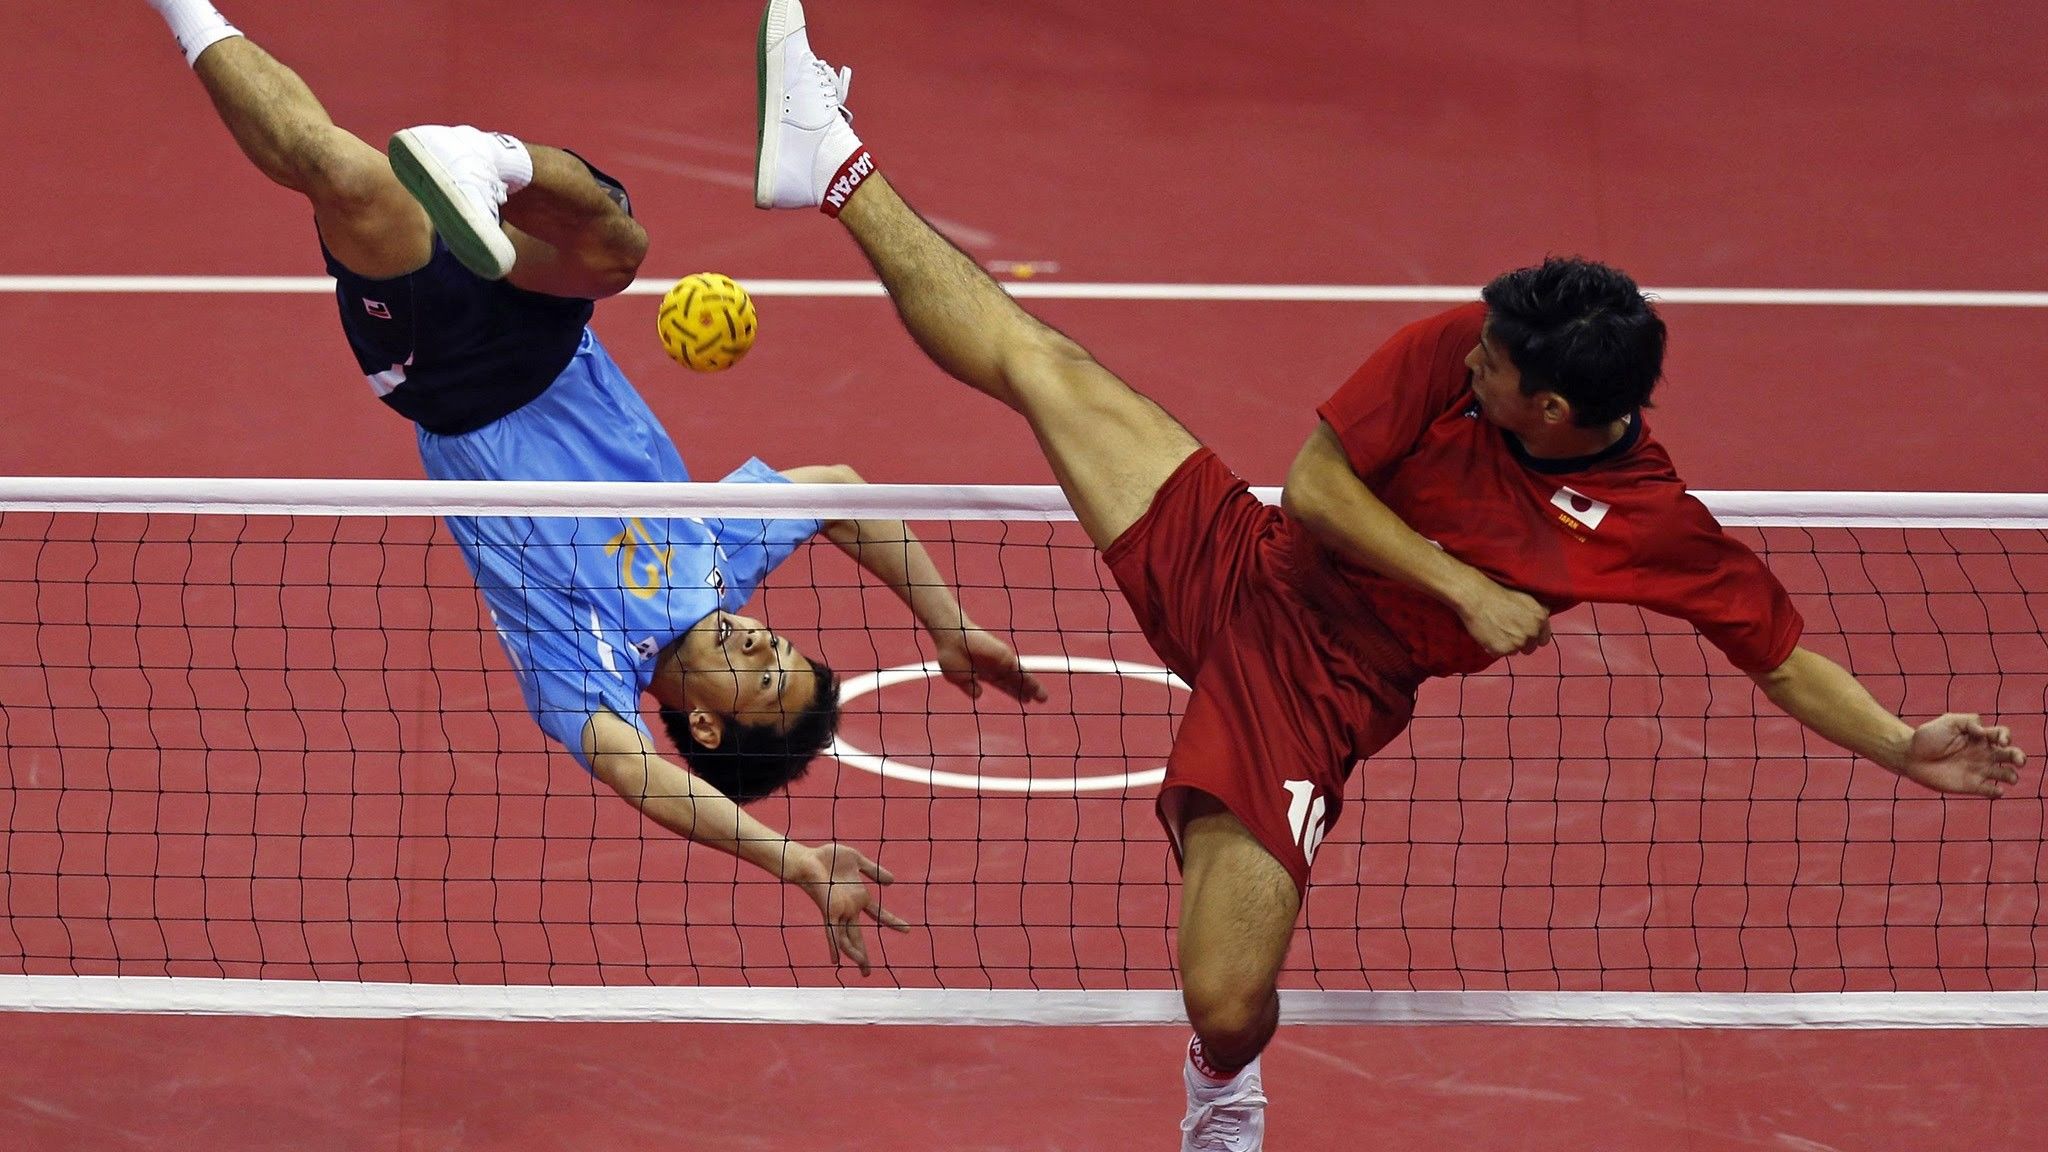 Gambar Olahraga  Tradisional Di Indonesia  Olahraga  Kunci 